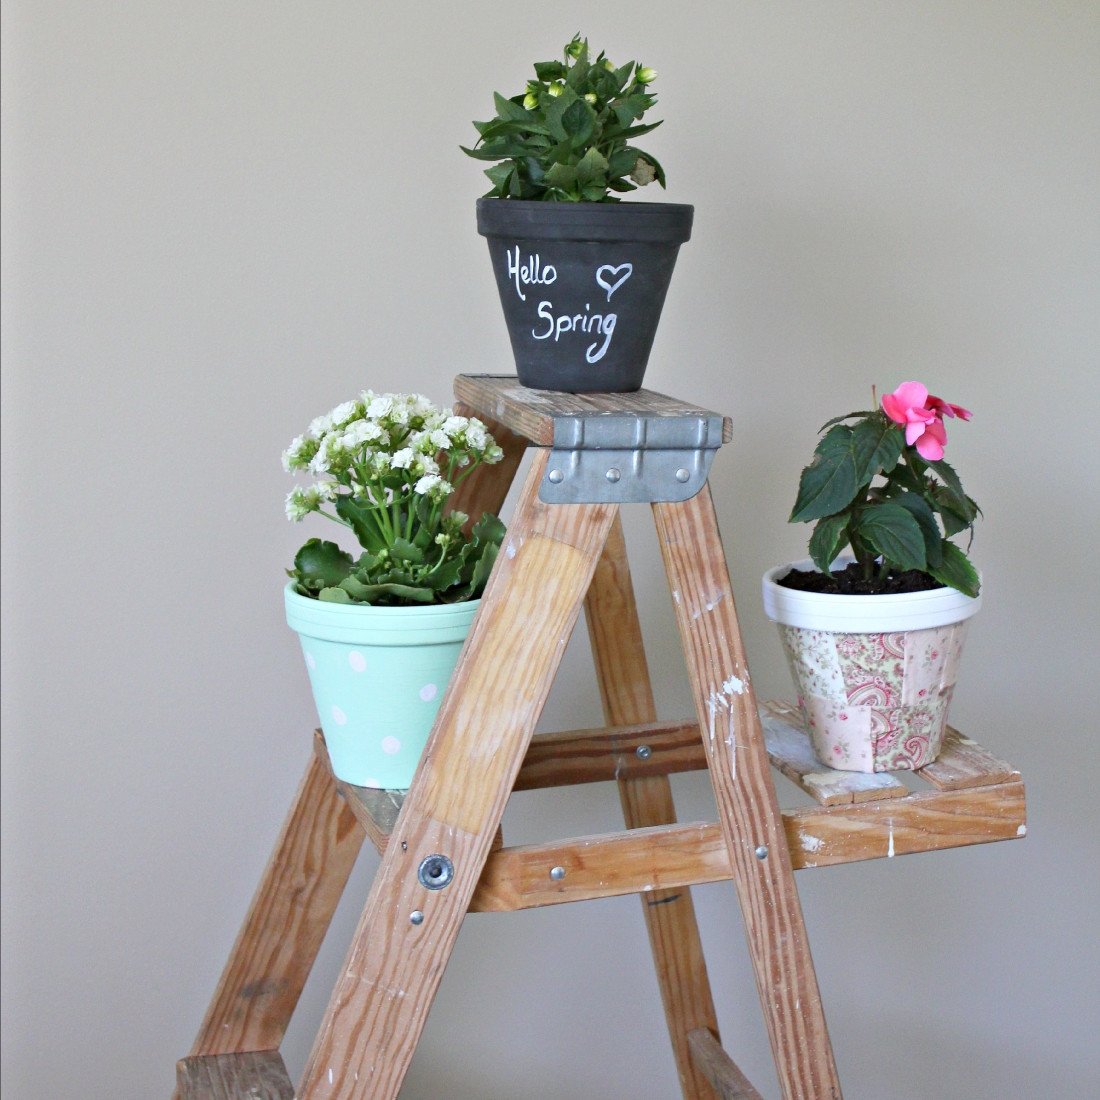 Best ideas about DIY Flower Pots
. Save or Pin Summer Celebration Pretty Little DIY Flower Pots making Now.